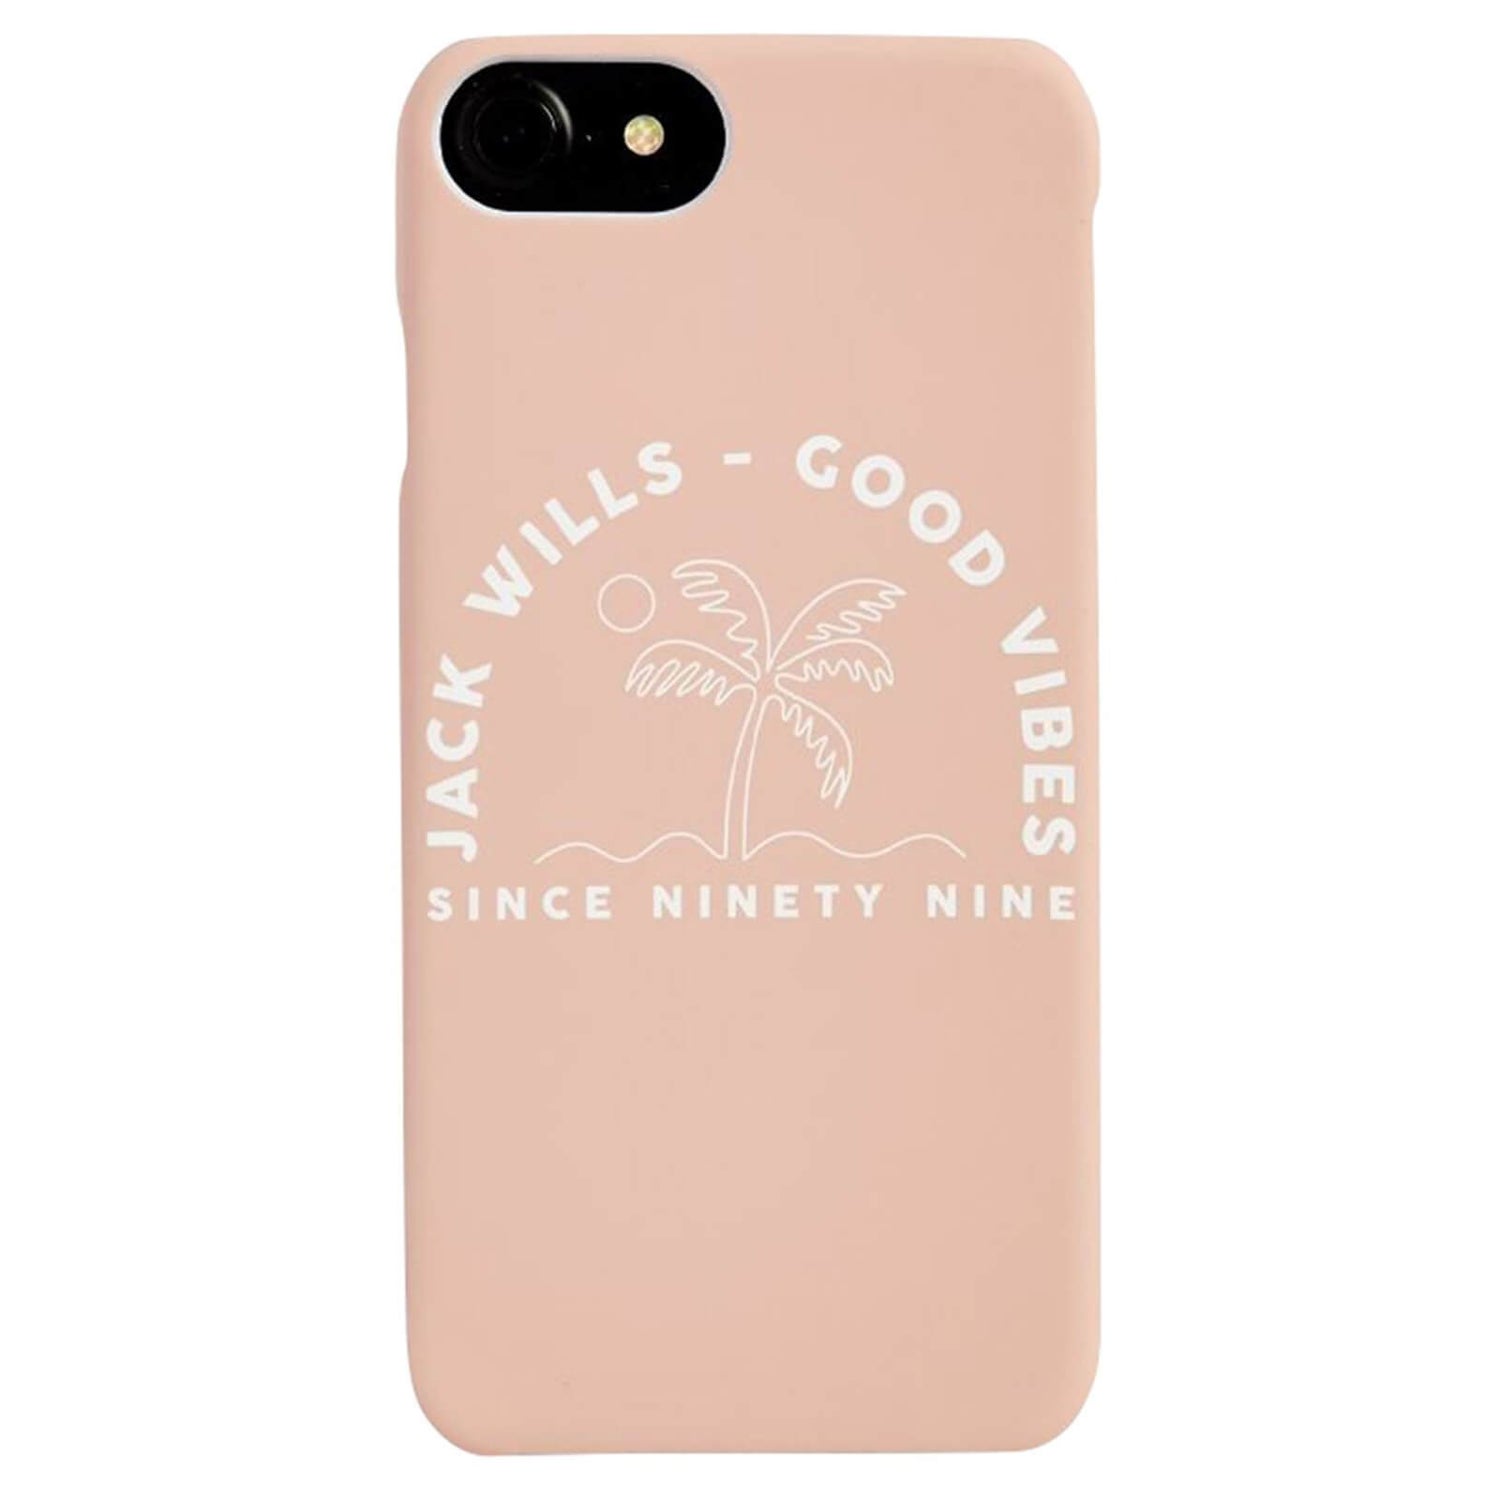 Flint Good Vibes Iphone Case 6 6s 7 8 - Pink